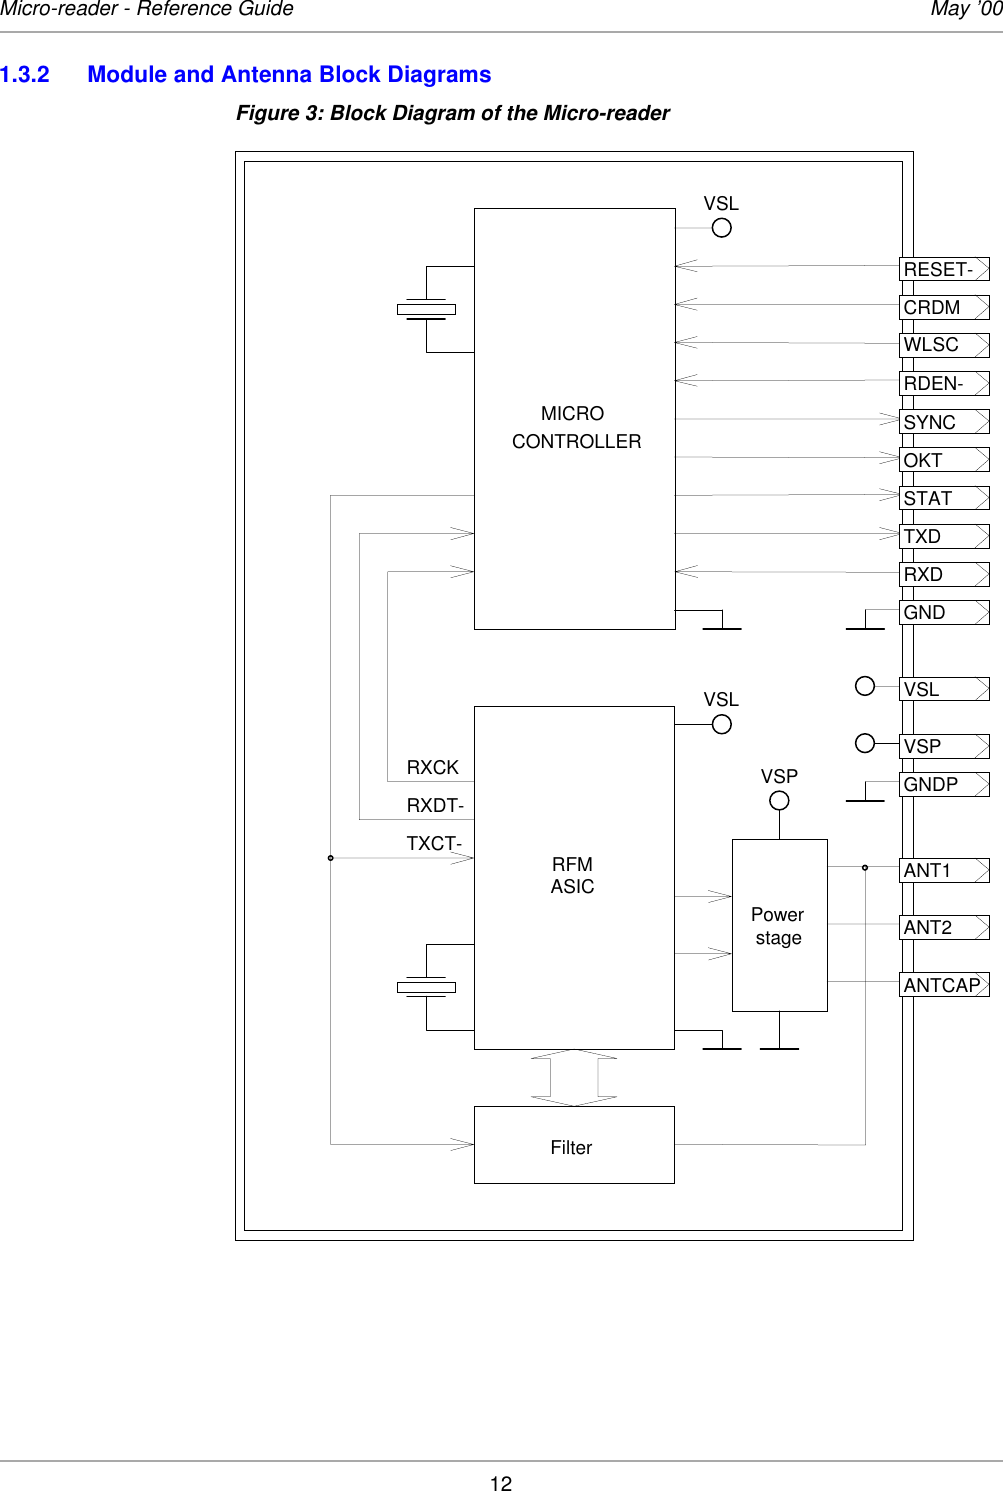 12Micro-reader - Reference Guide May ’001.3.2 Module and Antenna Block DiagramsFigure 3: Block Diagram of the Micro-readerRESET-CRDMRDEN-SYNCOKTSTATTXDRXDGNDVSLGNDPMICROCONTROLLERRFMASIC ANT1ANT2ANTCAPPowerstageFilterRXCKRXDT-TXCT-VSLVSPVSLWLSCVSP